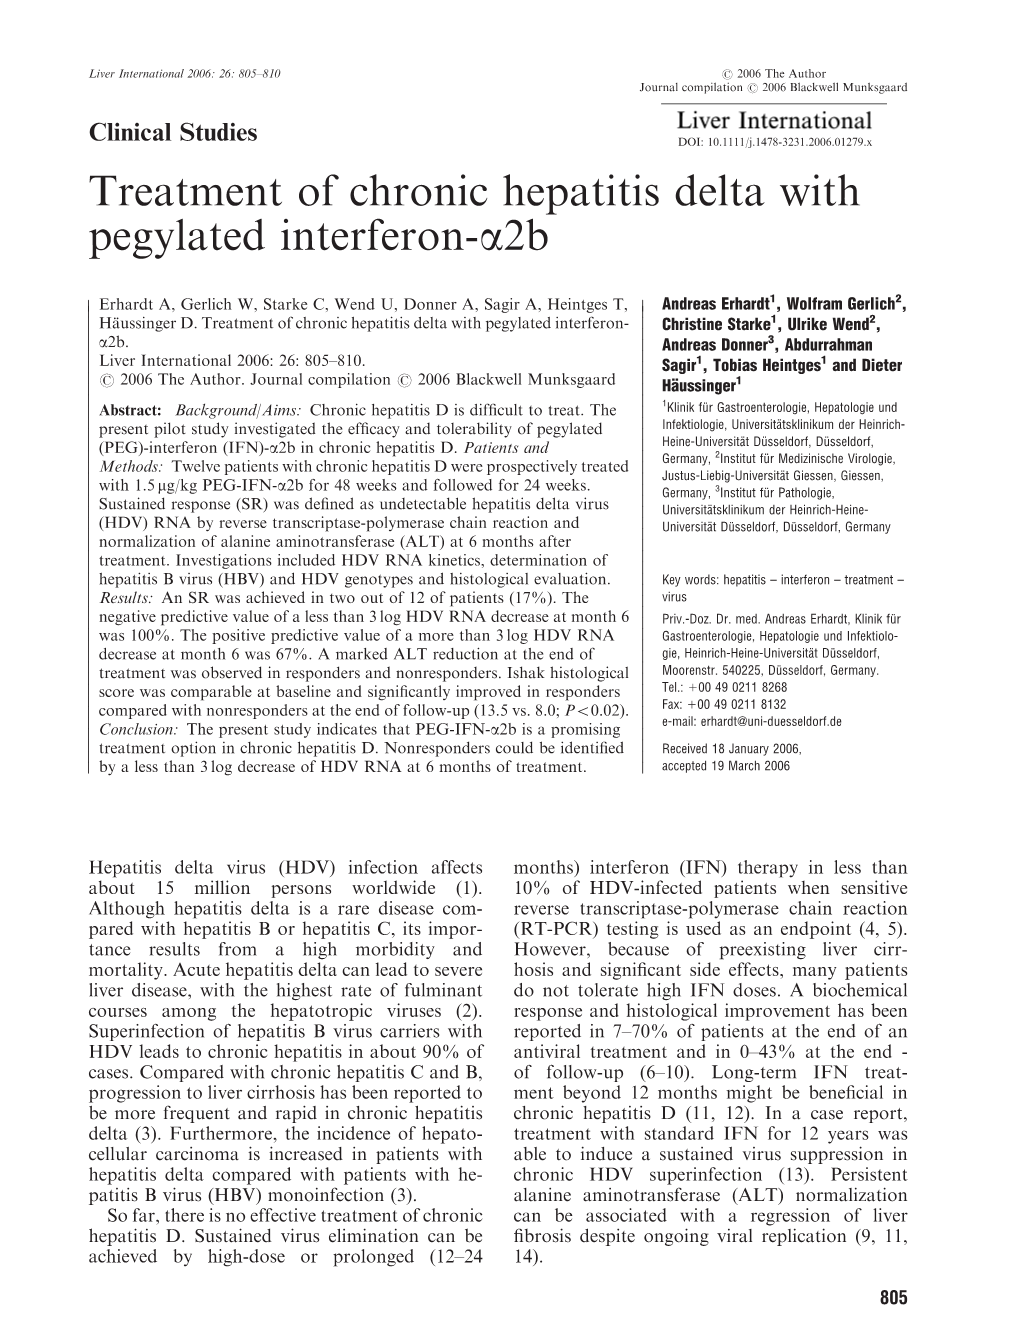 Treatment of Chronic Hepatitis Delta with Pegylated Interferon-Α2b